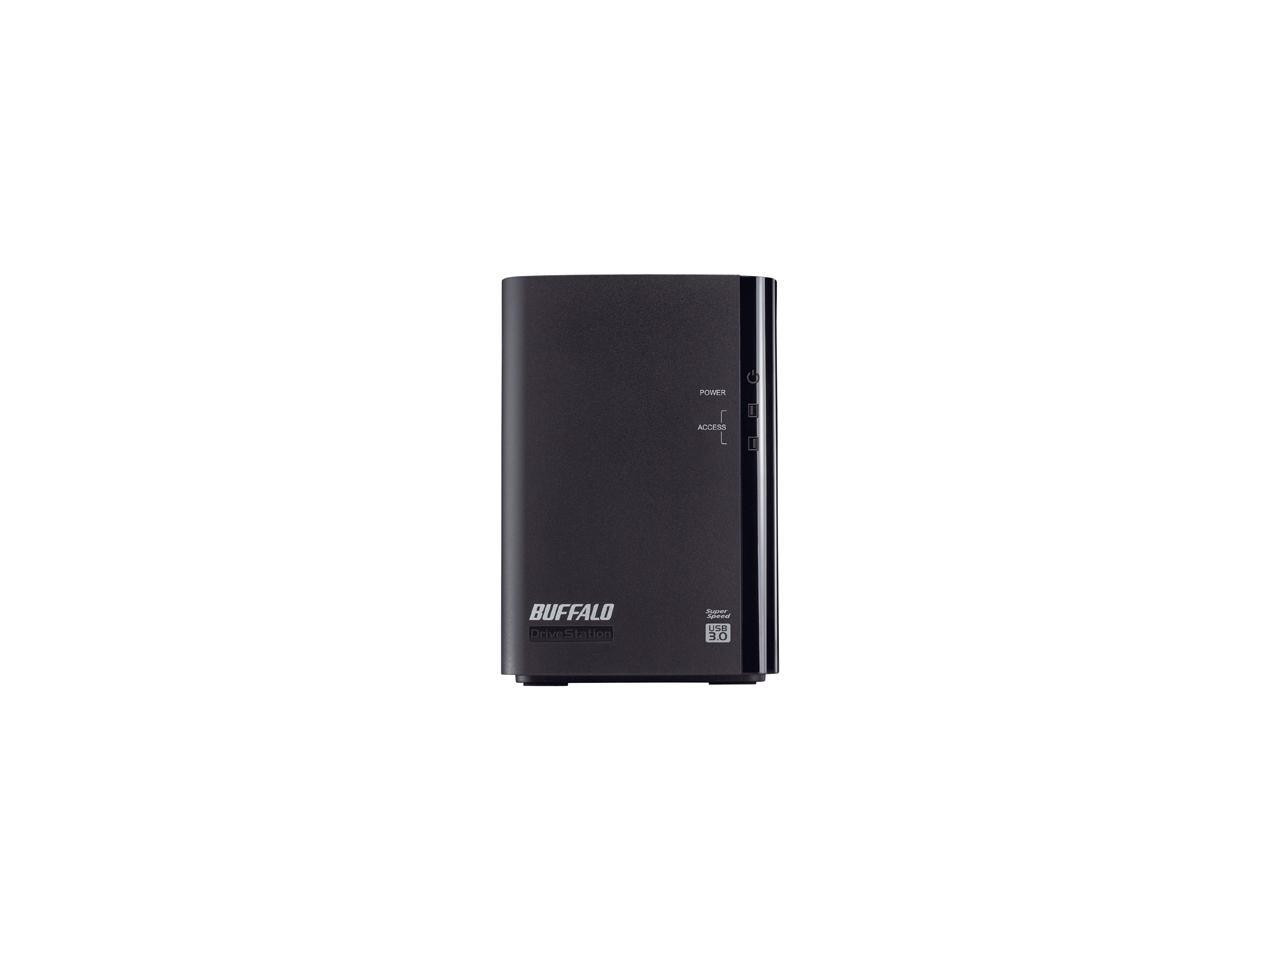 BUFFALO DriveStation Duo 8TB (2 x 4 TB) USB 3.0 High Performance RAID Array with Optimized Hard Drives HD-WH8TU3R1 Black